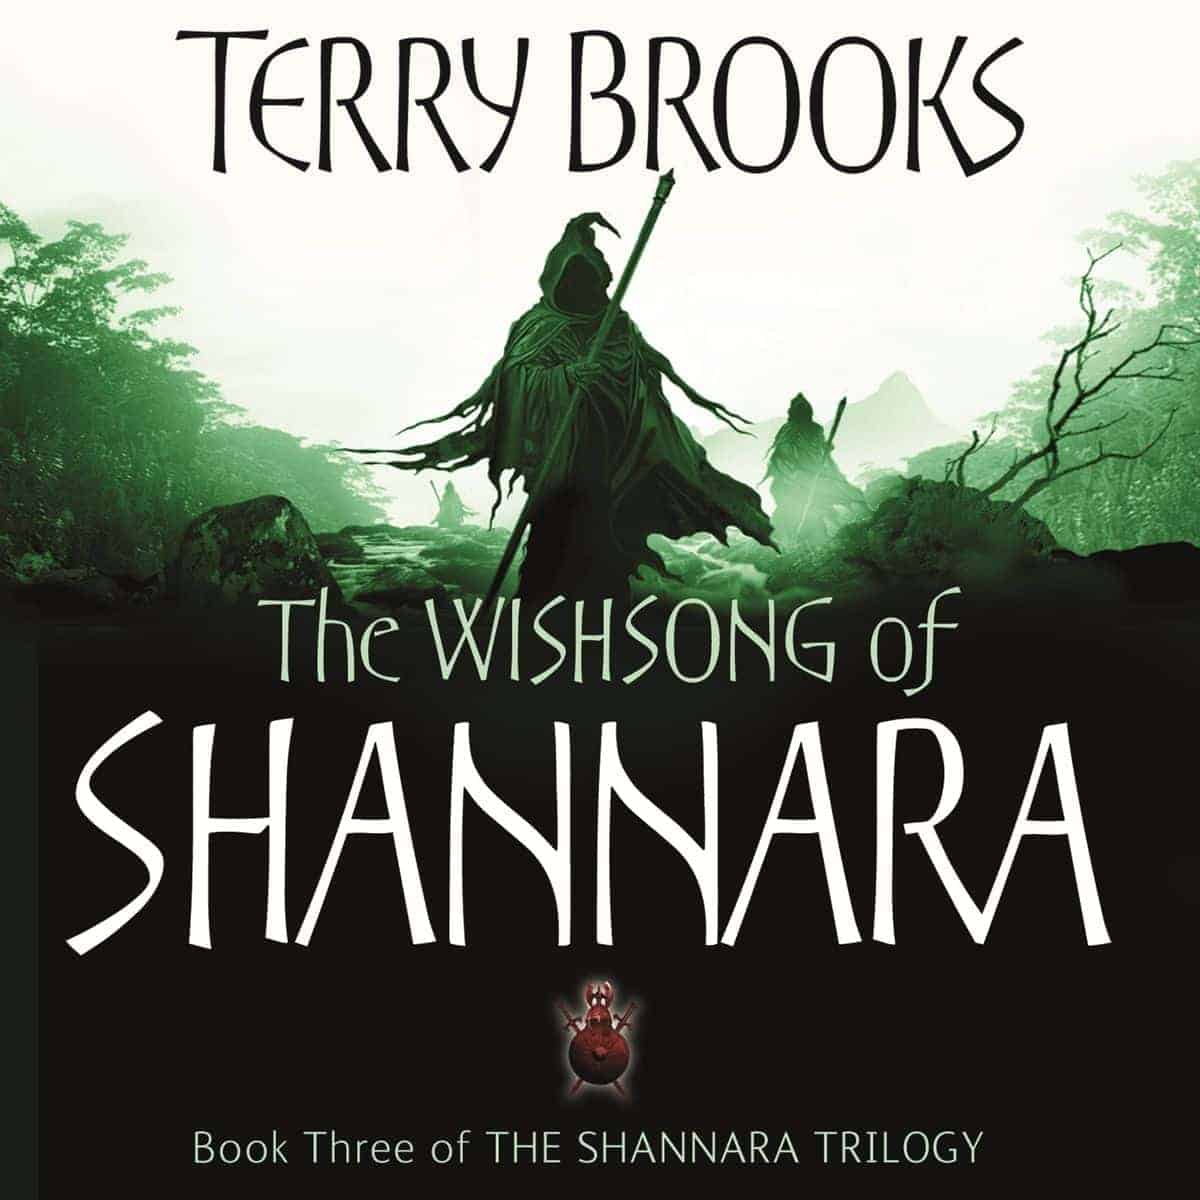 Wishsong of Shannara Audiobook Free Download